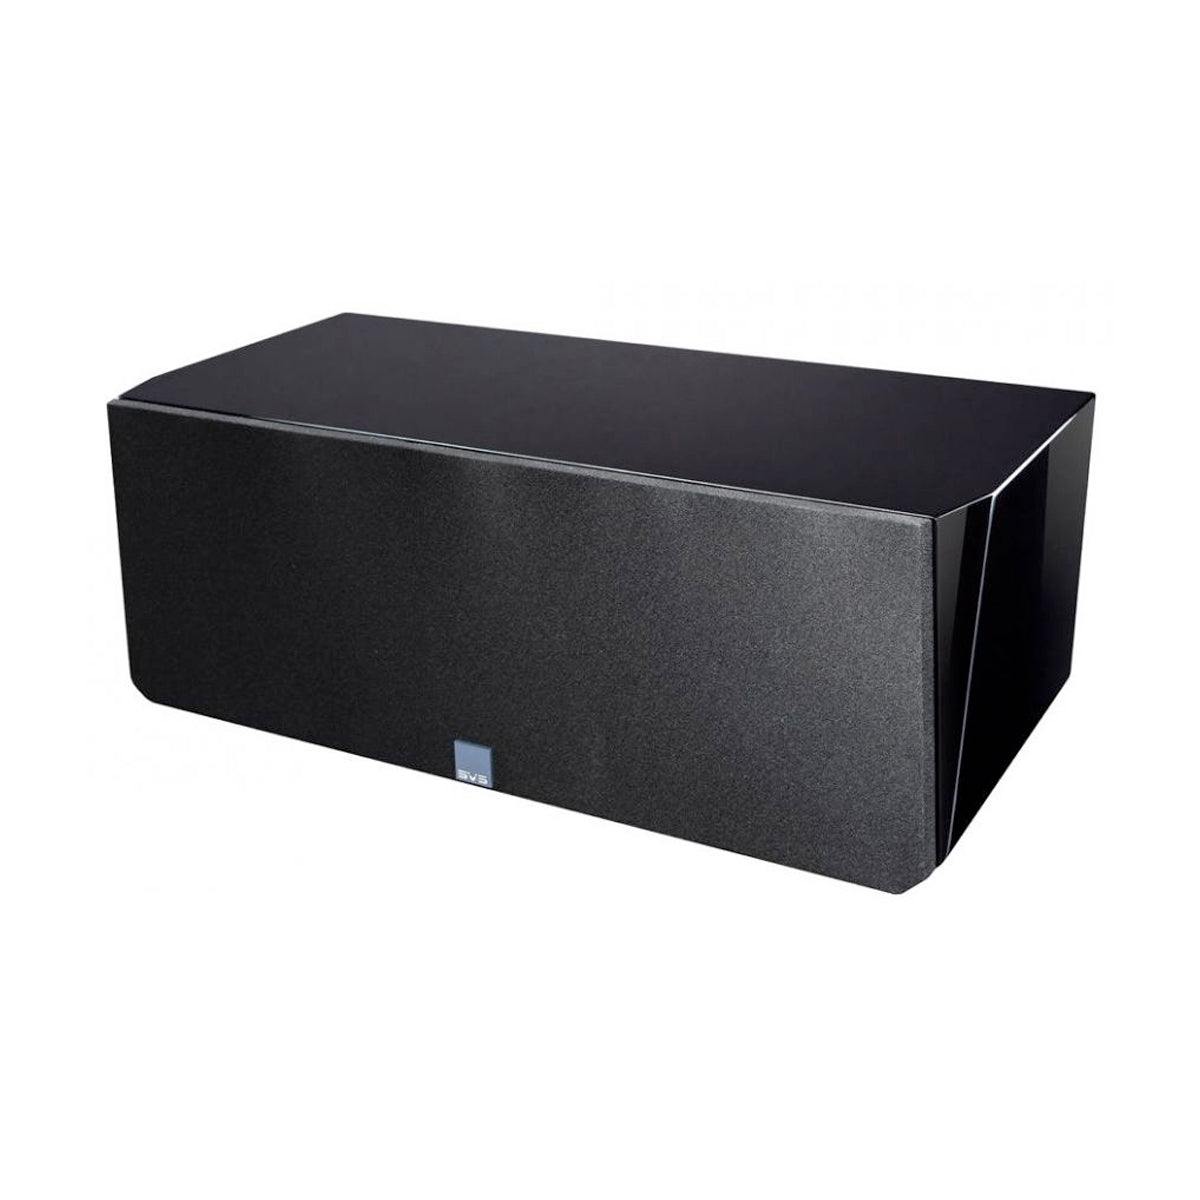 SVS Ultra 6.5" Centre Speakers - Black Oak